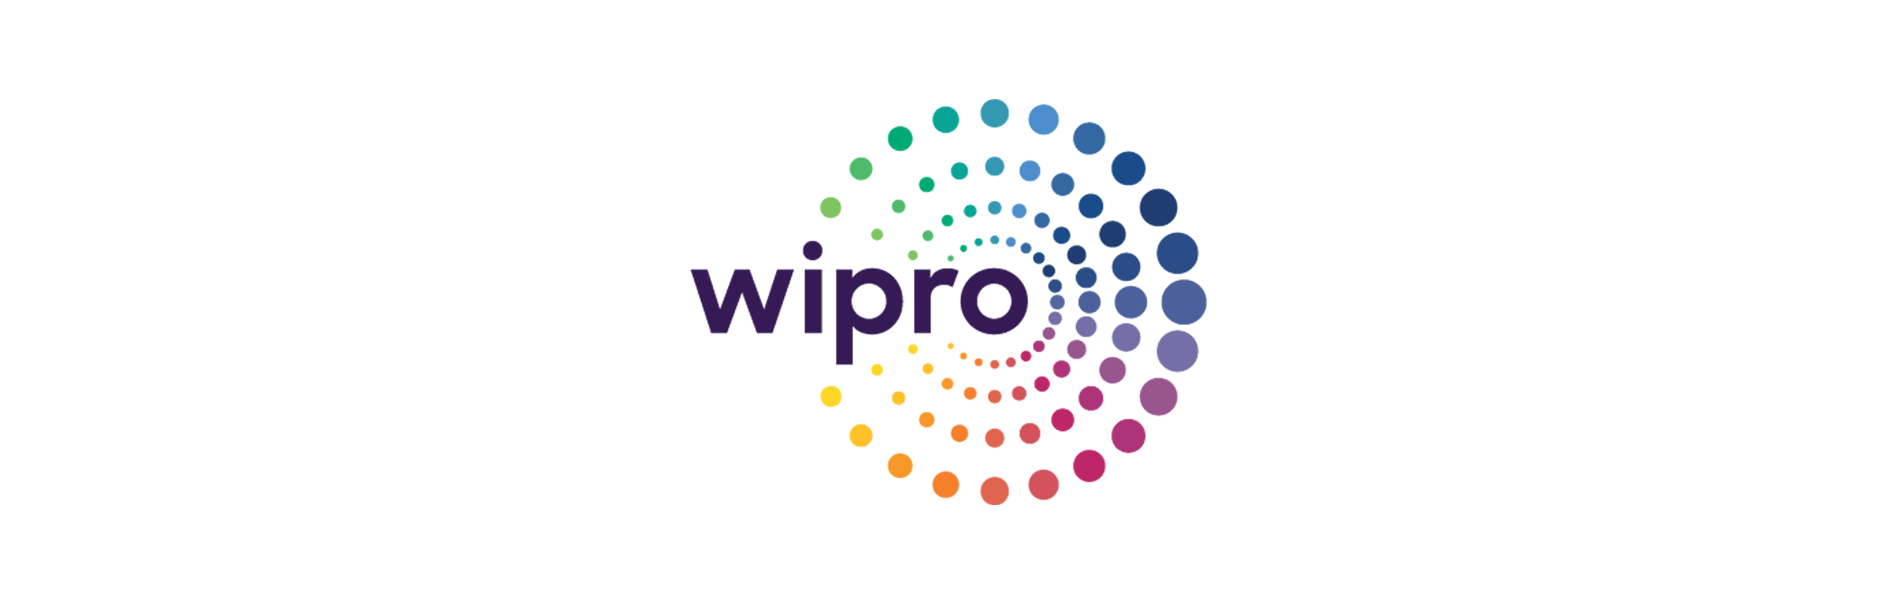 Wipro Ventures Invests in vFunction